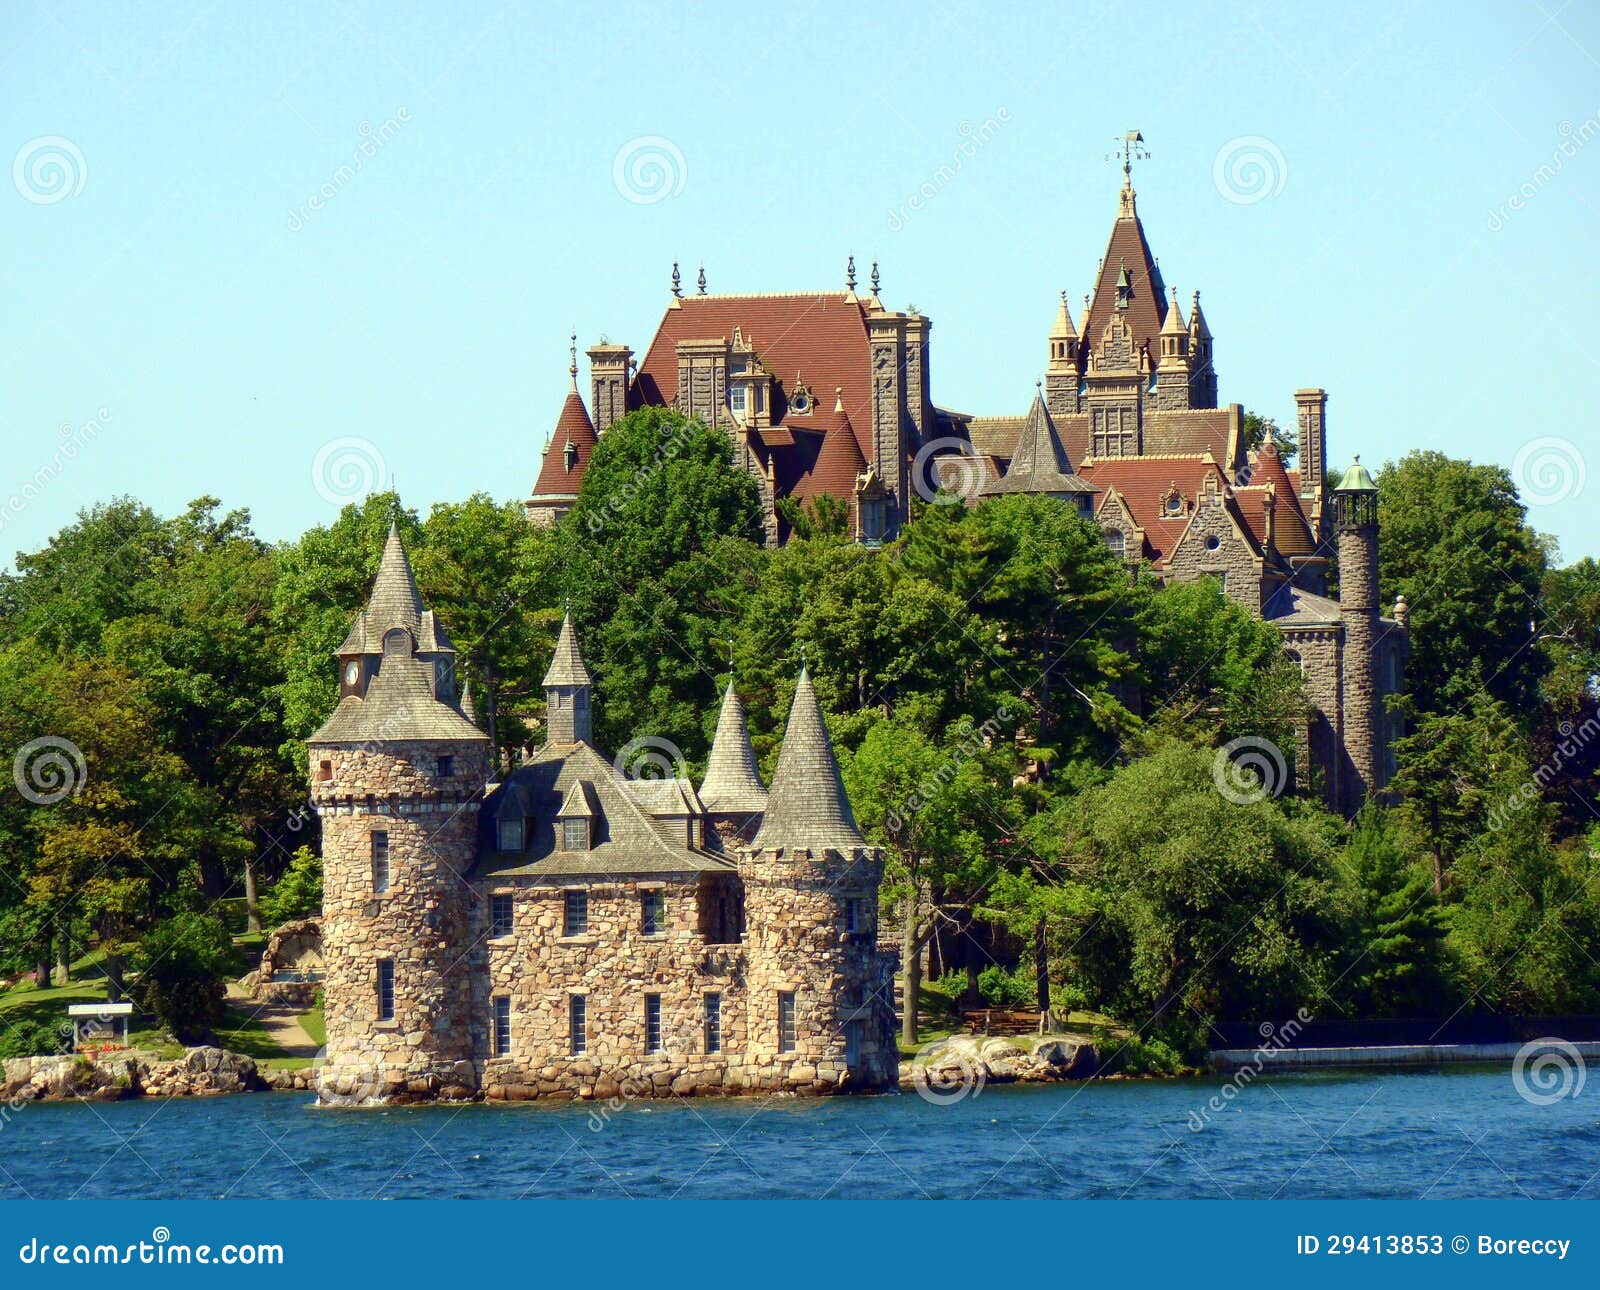 boldt castle in thousand island, new york